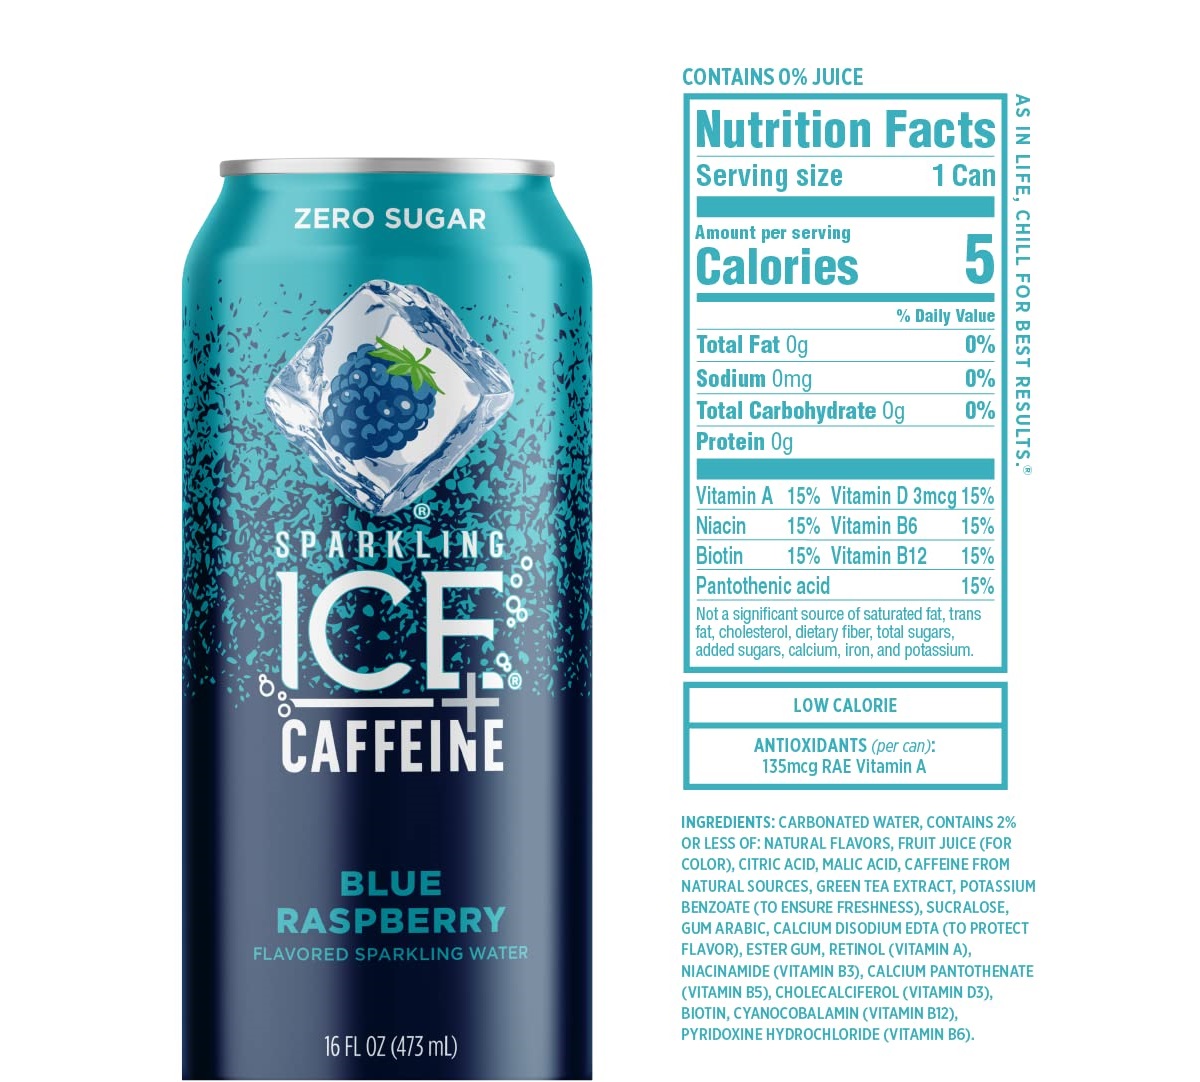 20-sparkling-ice-caffeine-nutrition-facts